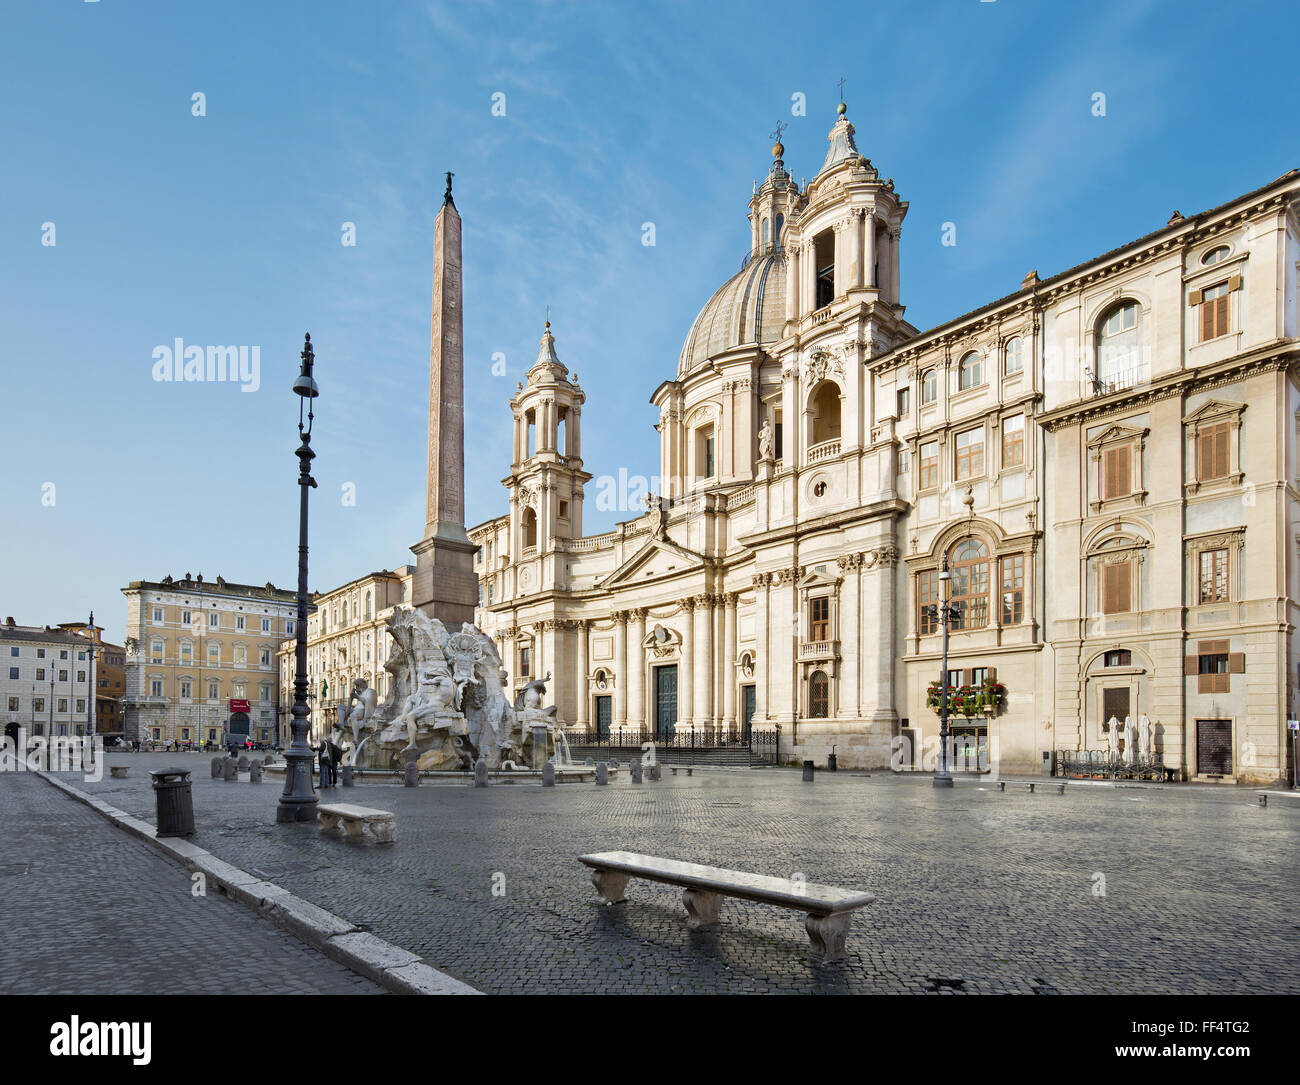 Rom, Italien - 27. März 2015: Piazza Navona und Fontana dei Fiumi von Bernini und Ägypter Obelisk und Santa Agnese in Agone Kirche Stockfoto